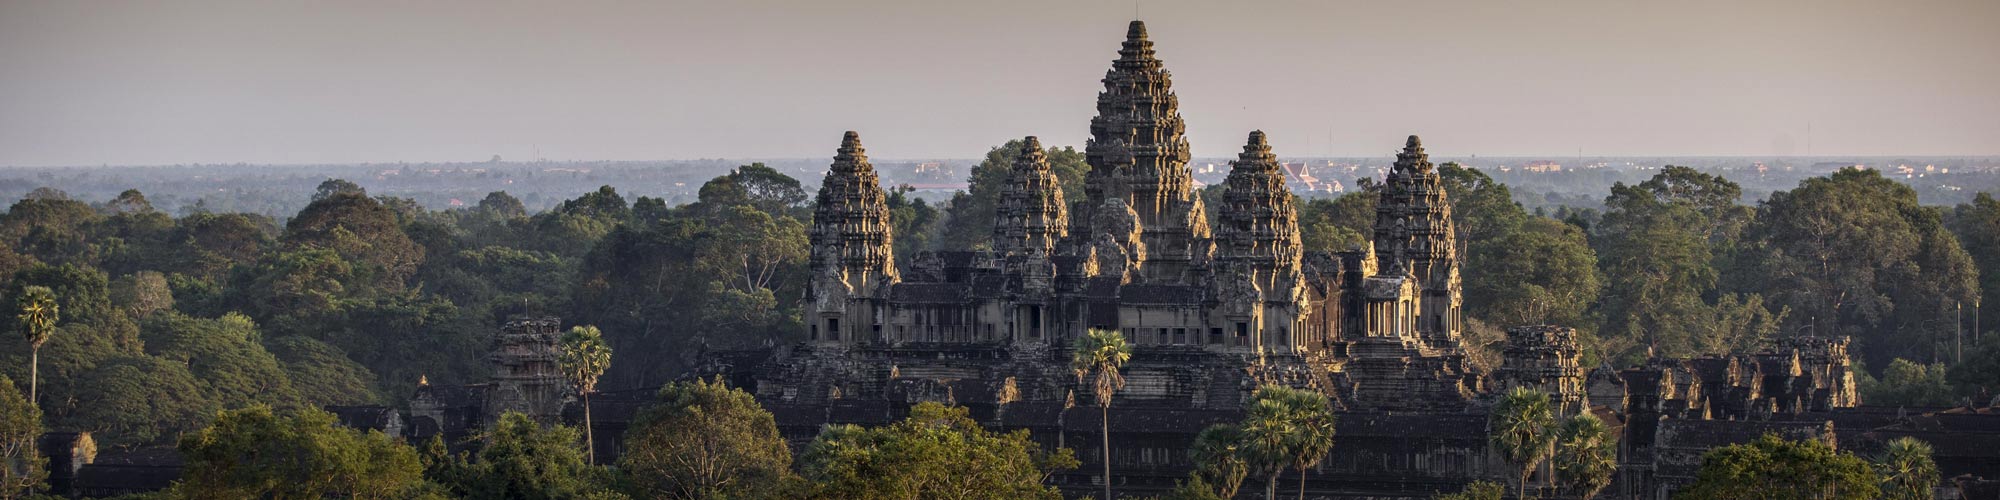 Voyage sur mesure Cambodge © stveak / Adobe Stock